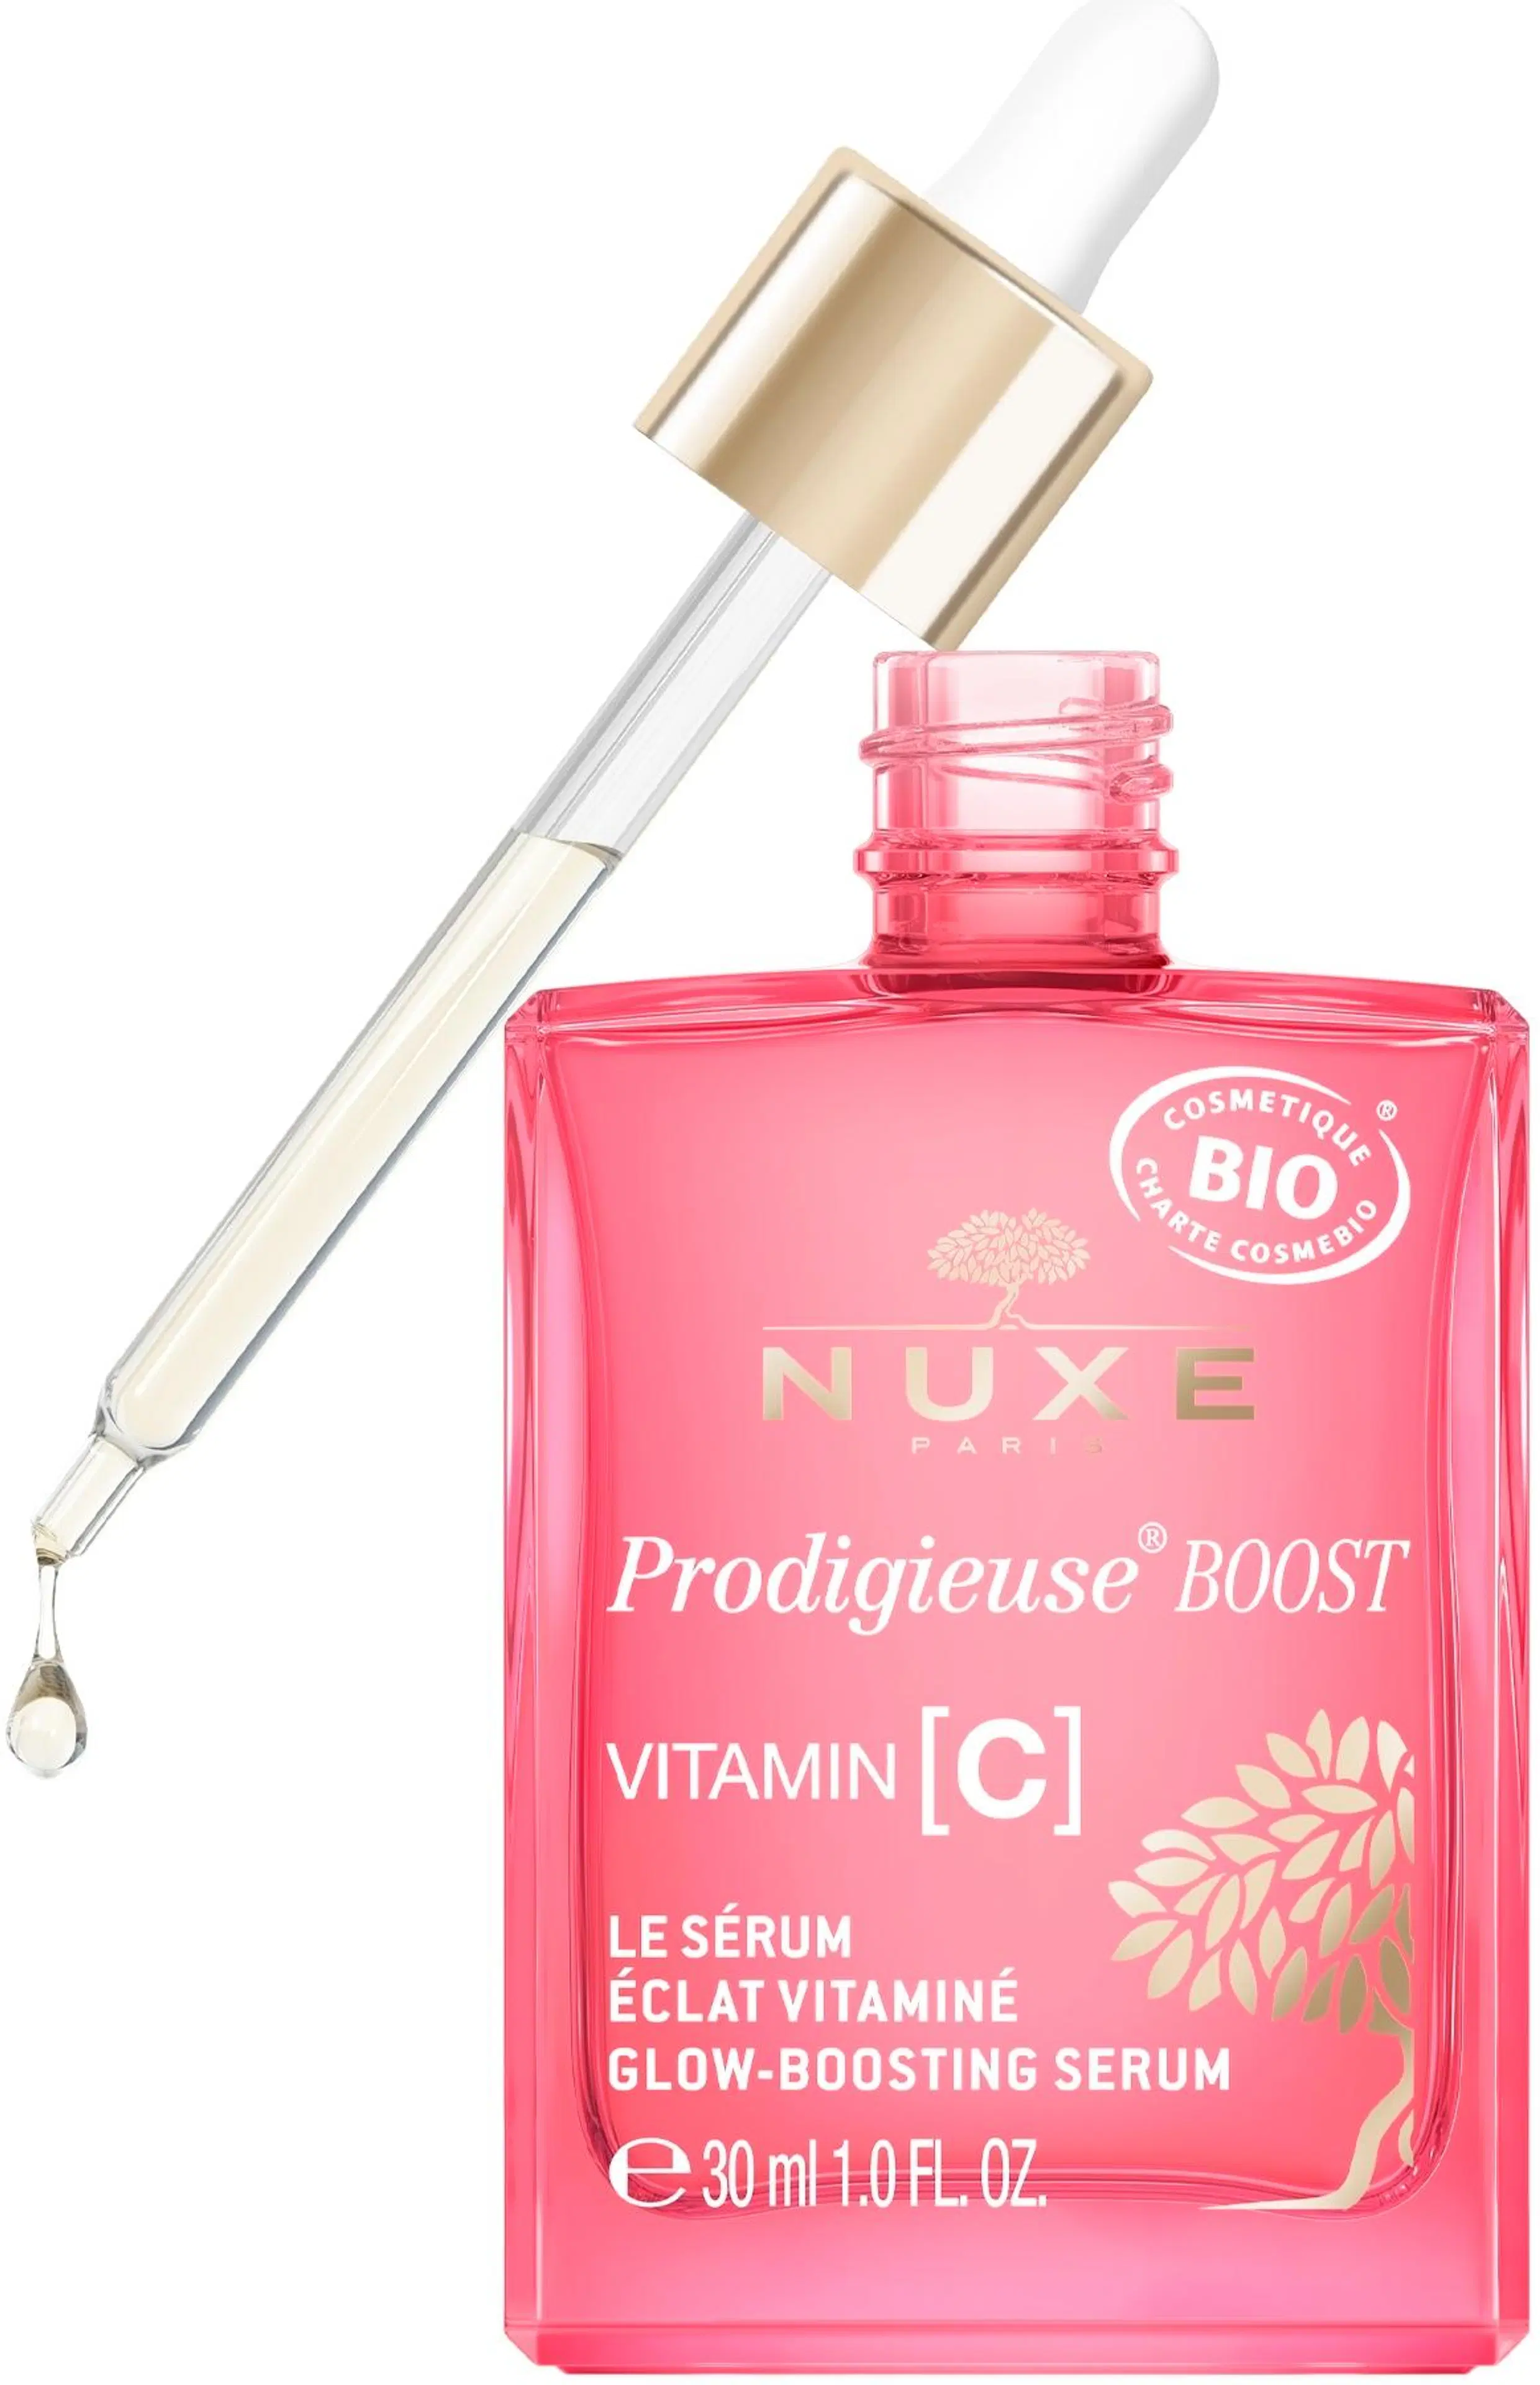 NUXE Prodigieuse Boost BIO Vitamin C Glow-Boosting Serum C-vitamiiniseerumi kasvoille 30 ml